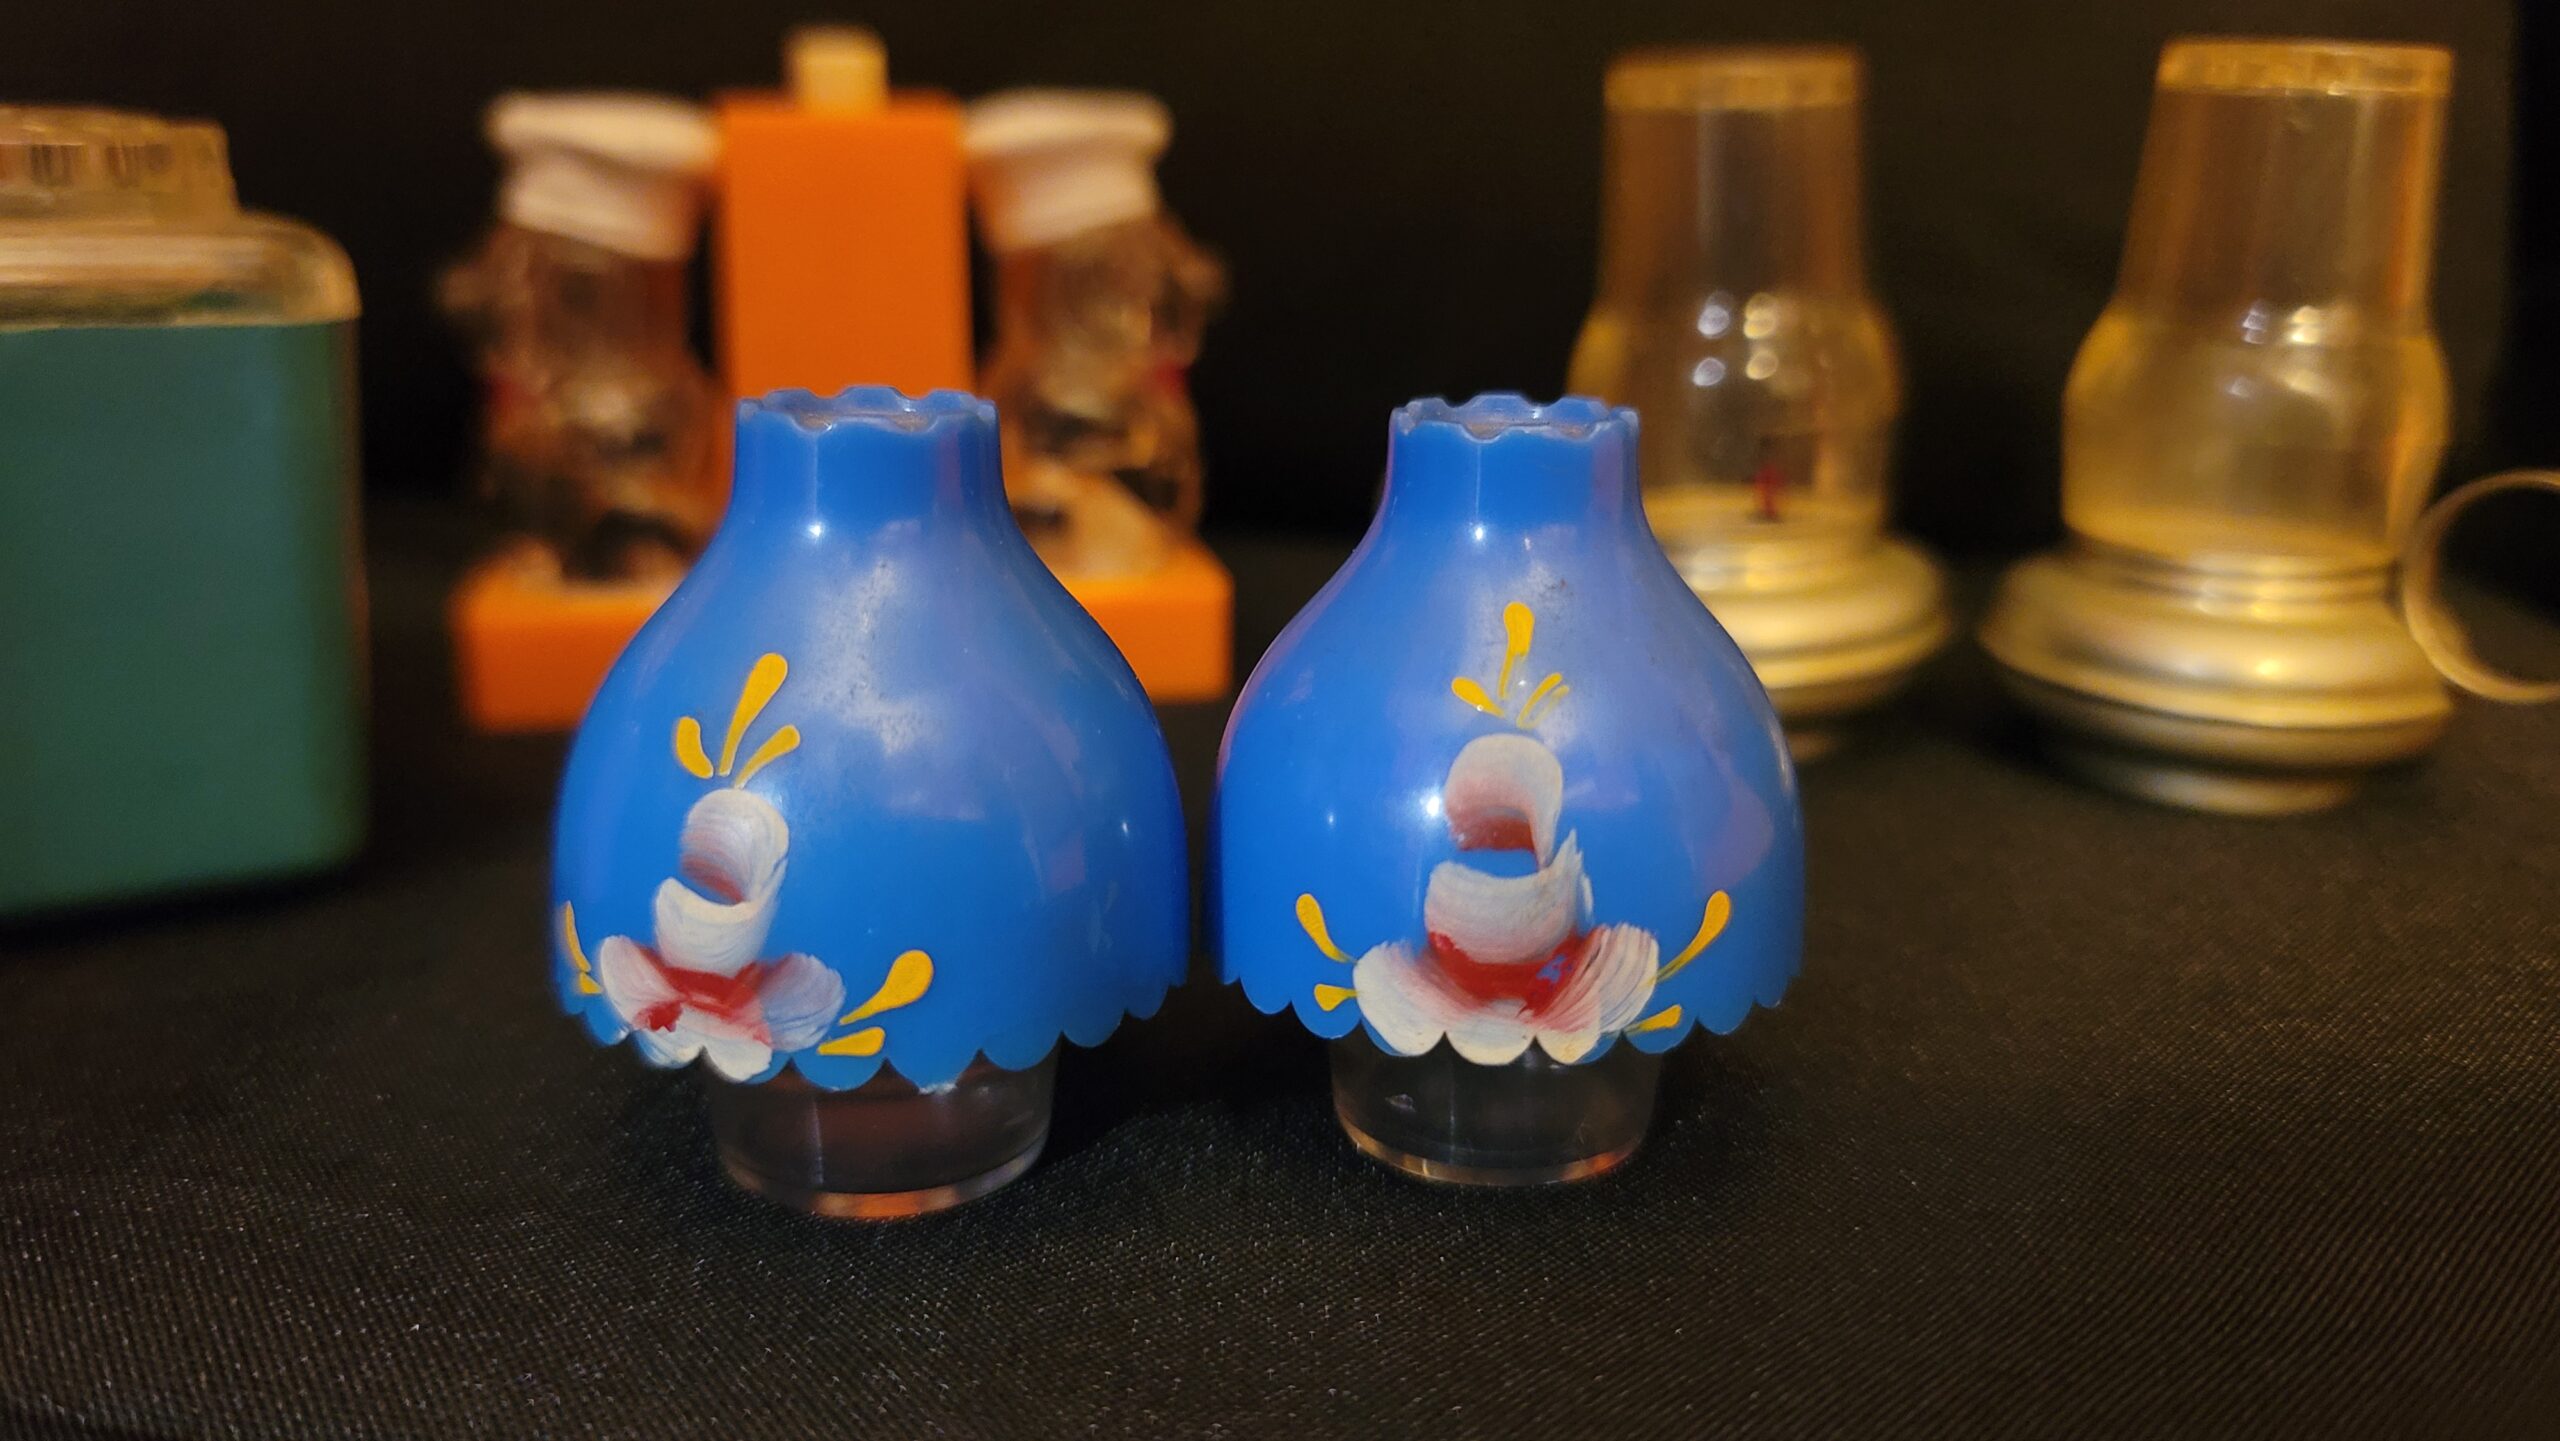 Vintage Salt and Pepper Shakers / Lanterns Scalloped Edge Blue Top